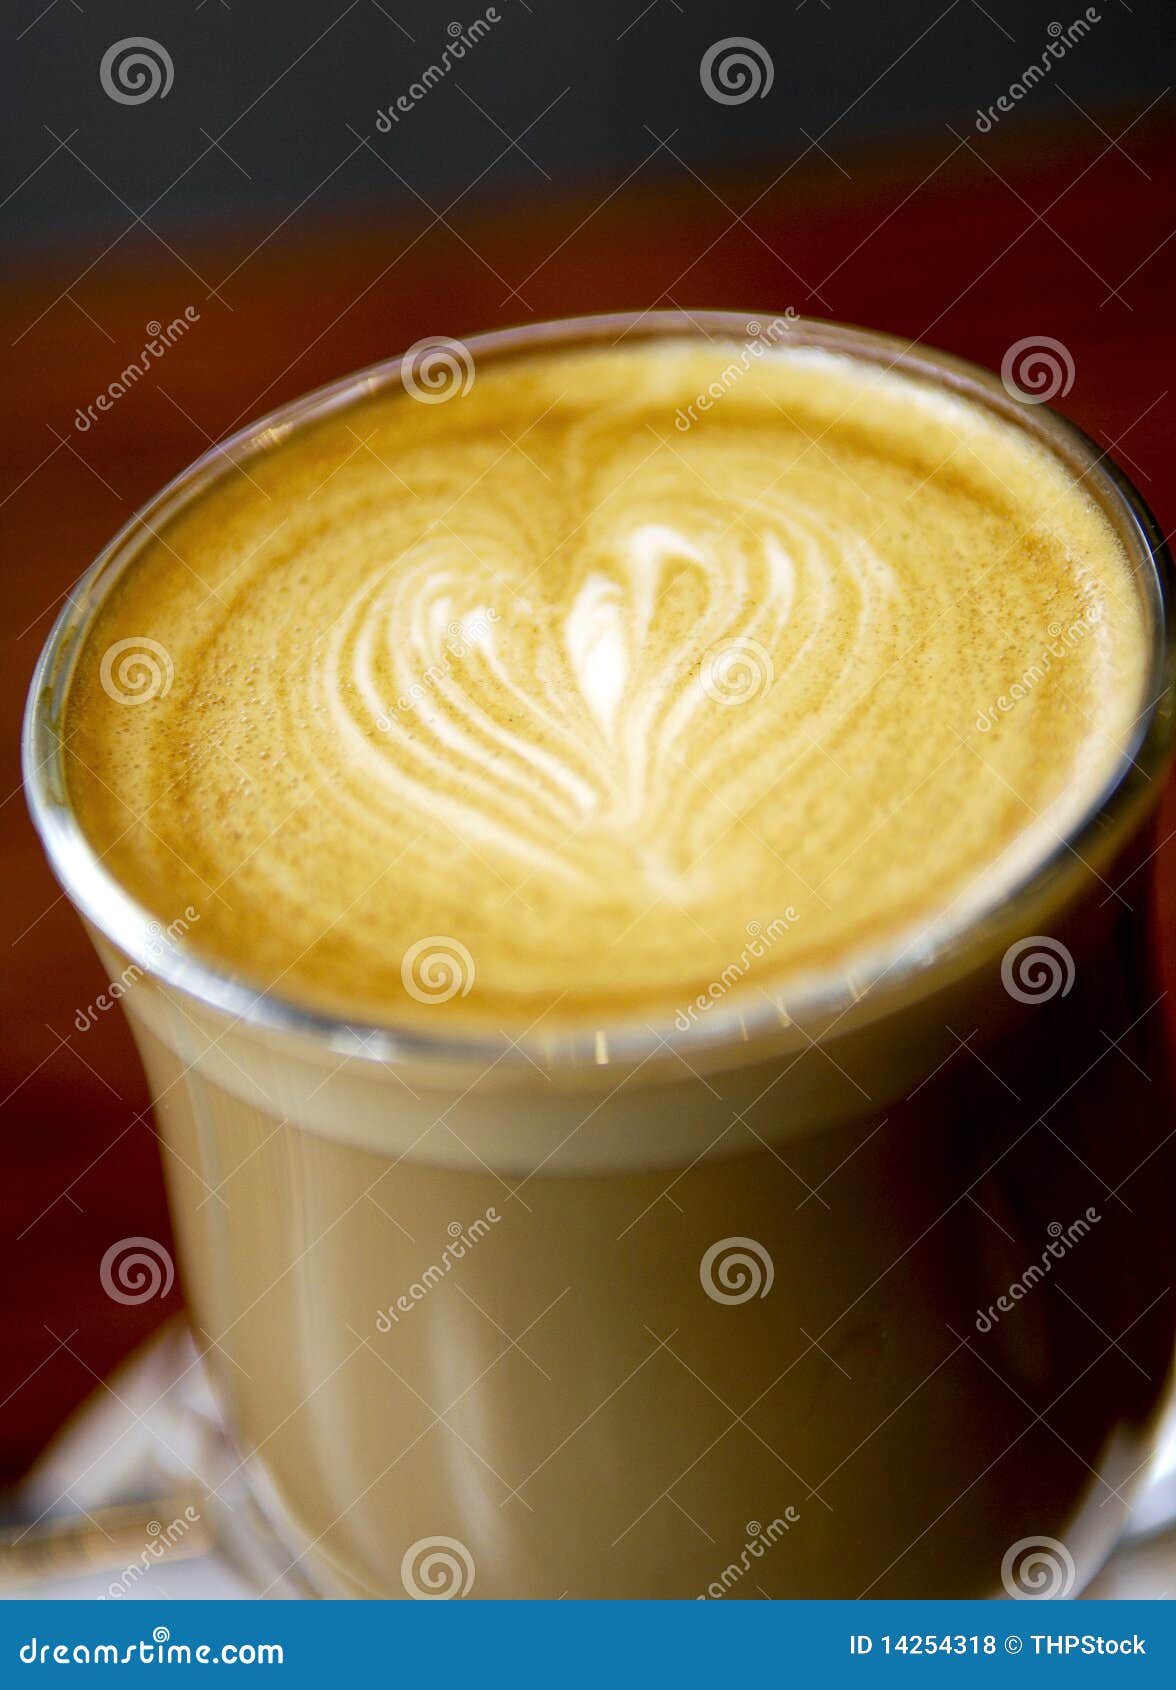 Latte Love Heart Coffee Royalty Free Stock Photos  Image: 14254318